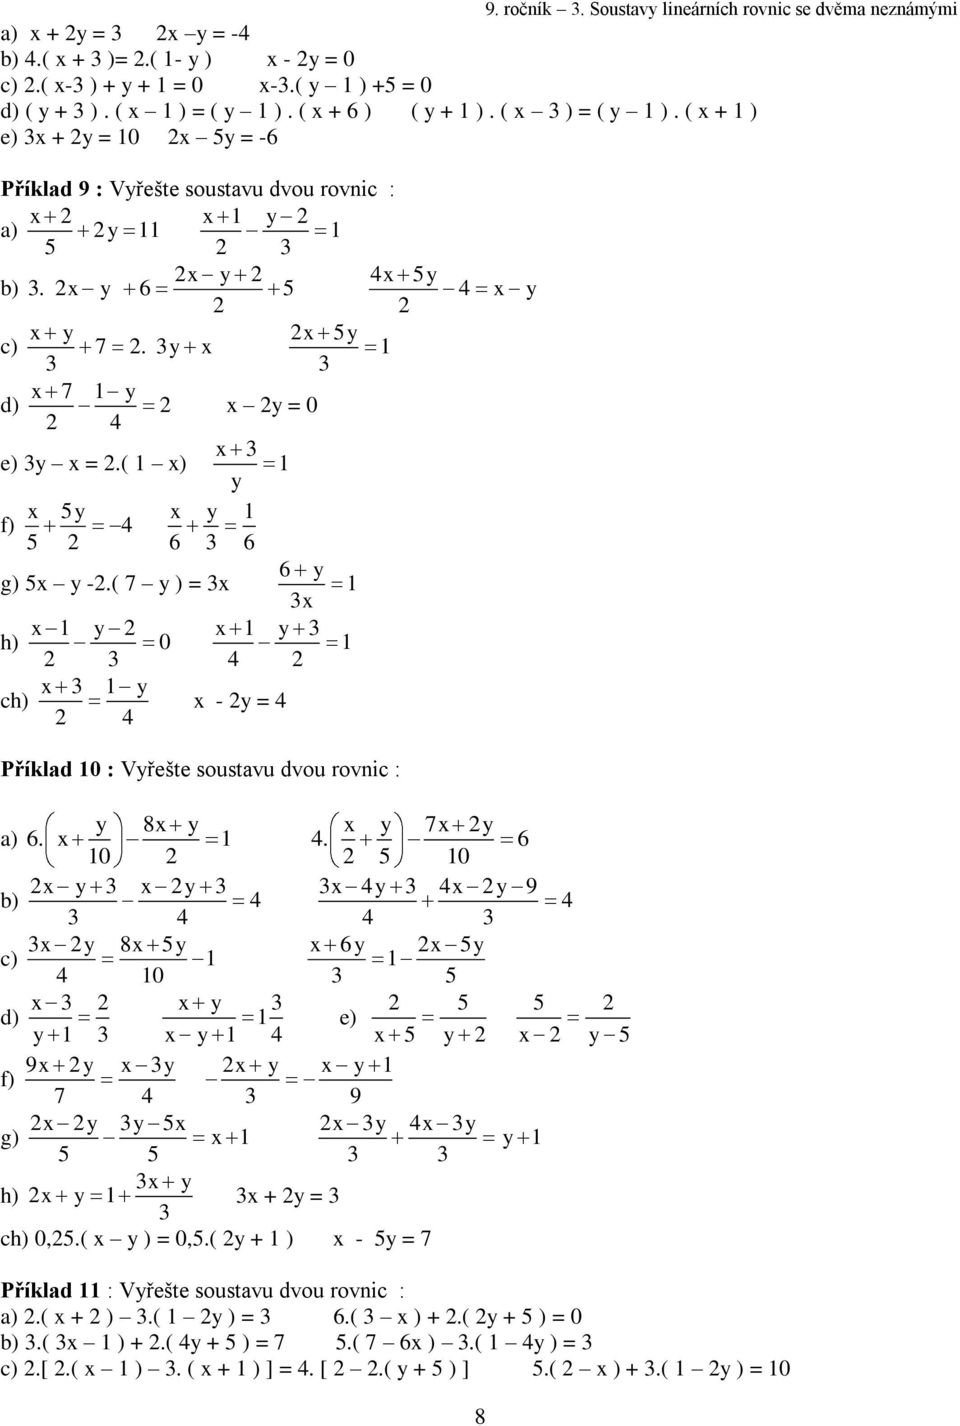 ( x) x y 5 f) x y 4 5 6 6 g) 5x y -.( 7 y ) = x 6 y x h) x 0 y 4 x y ch) 4 x - y = 4 4 x y Příklad 0 : Vyřešte soustavu dvou rovnic : y 8x y x y 7x y a) 6. x 4.